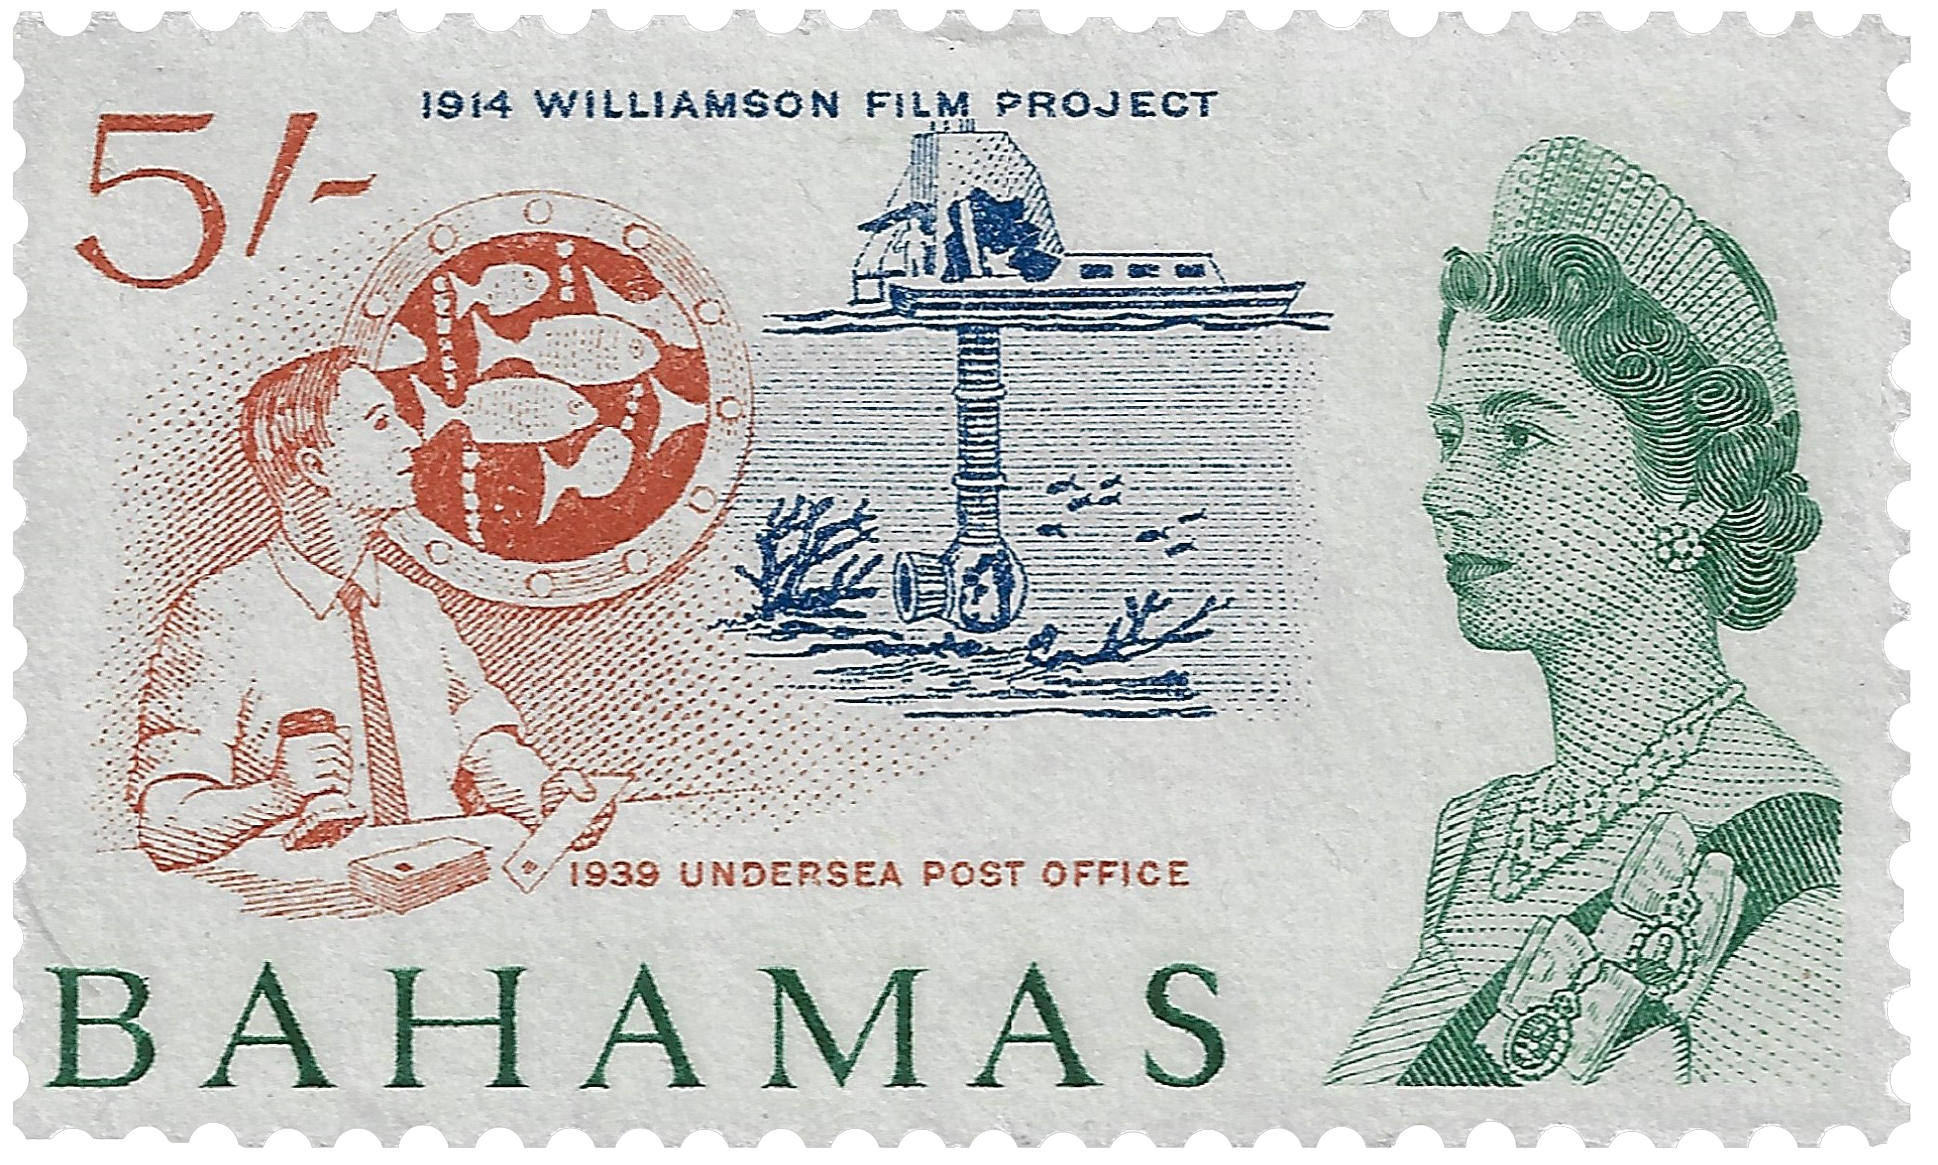 5s 1965, 1914 Williamson Film Project, 1939 Undersea Post Office